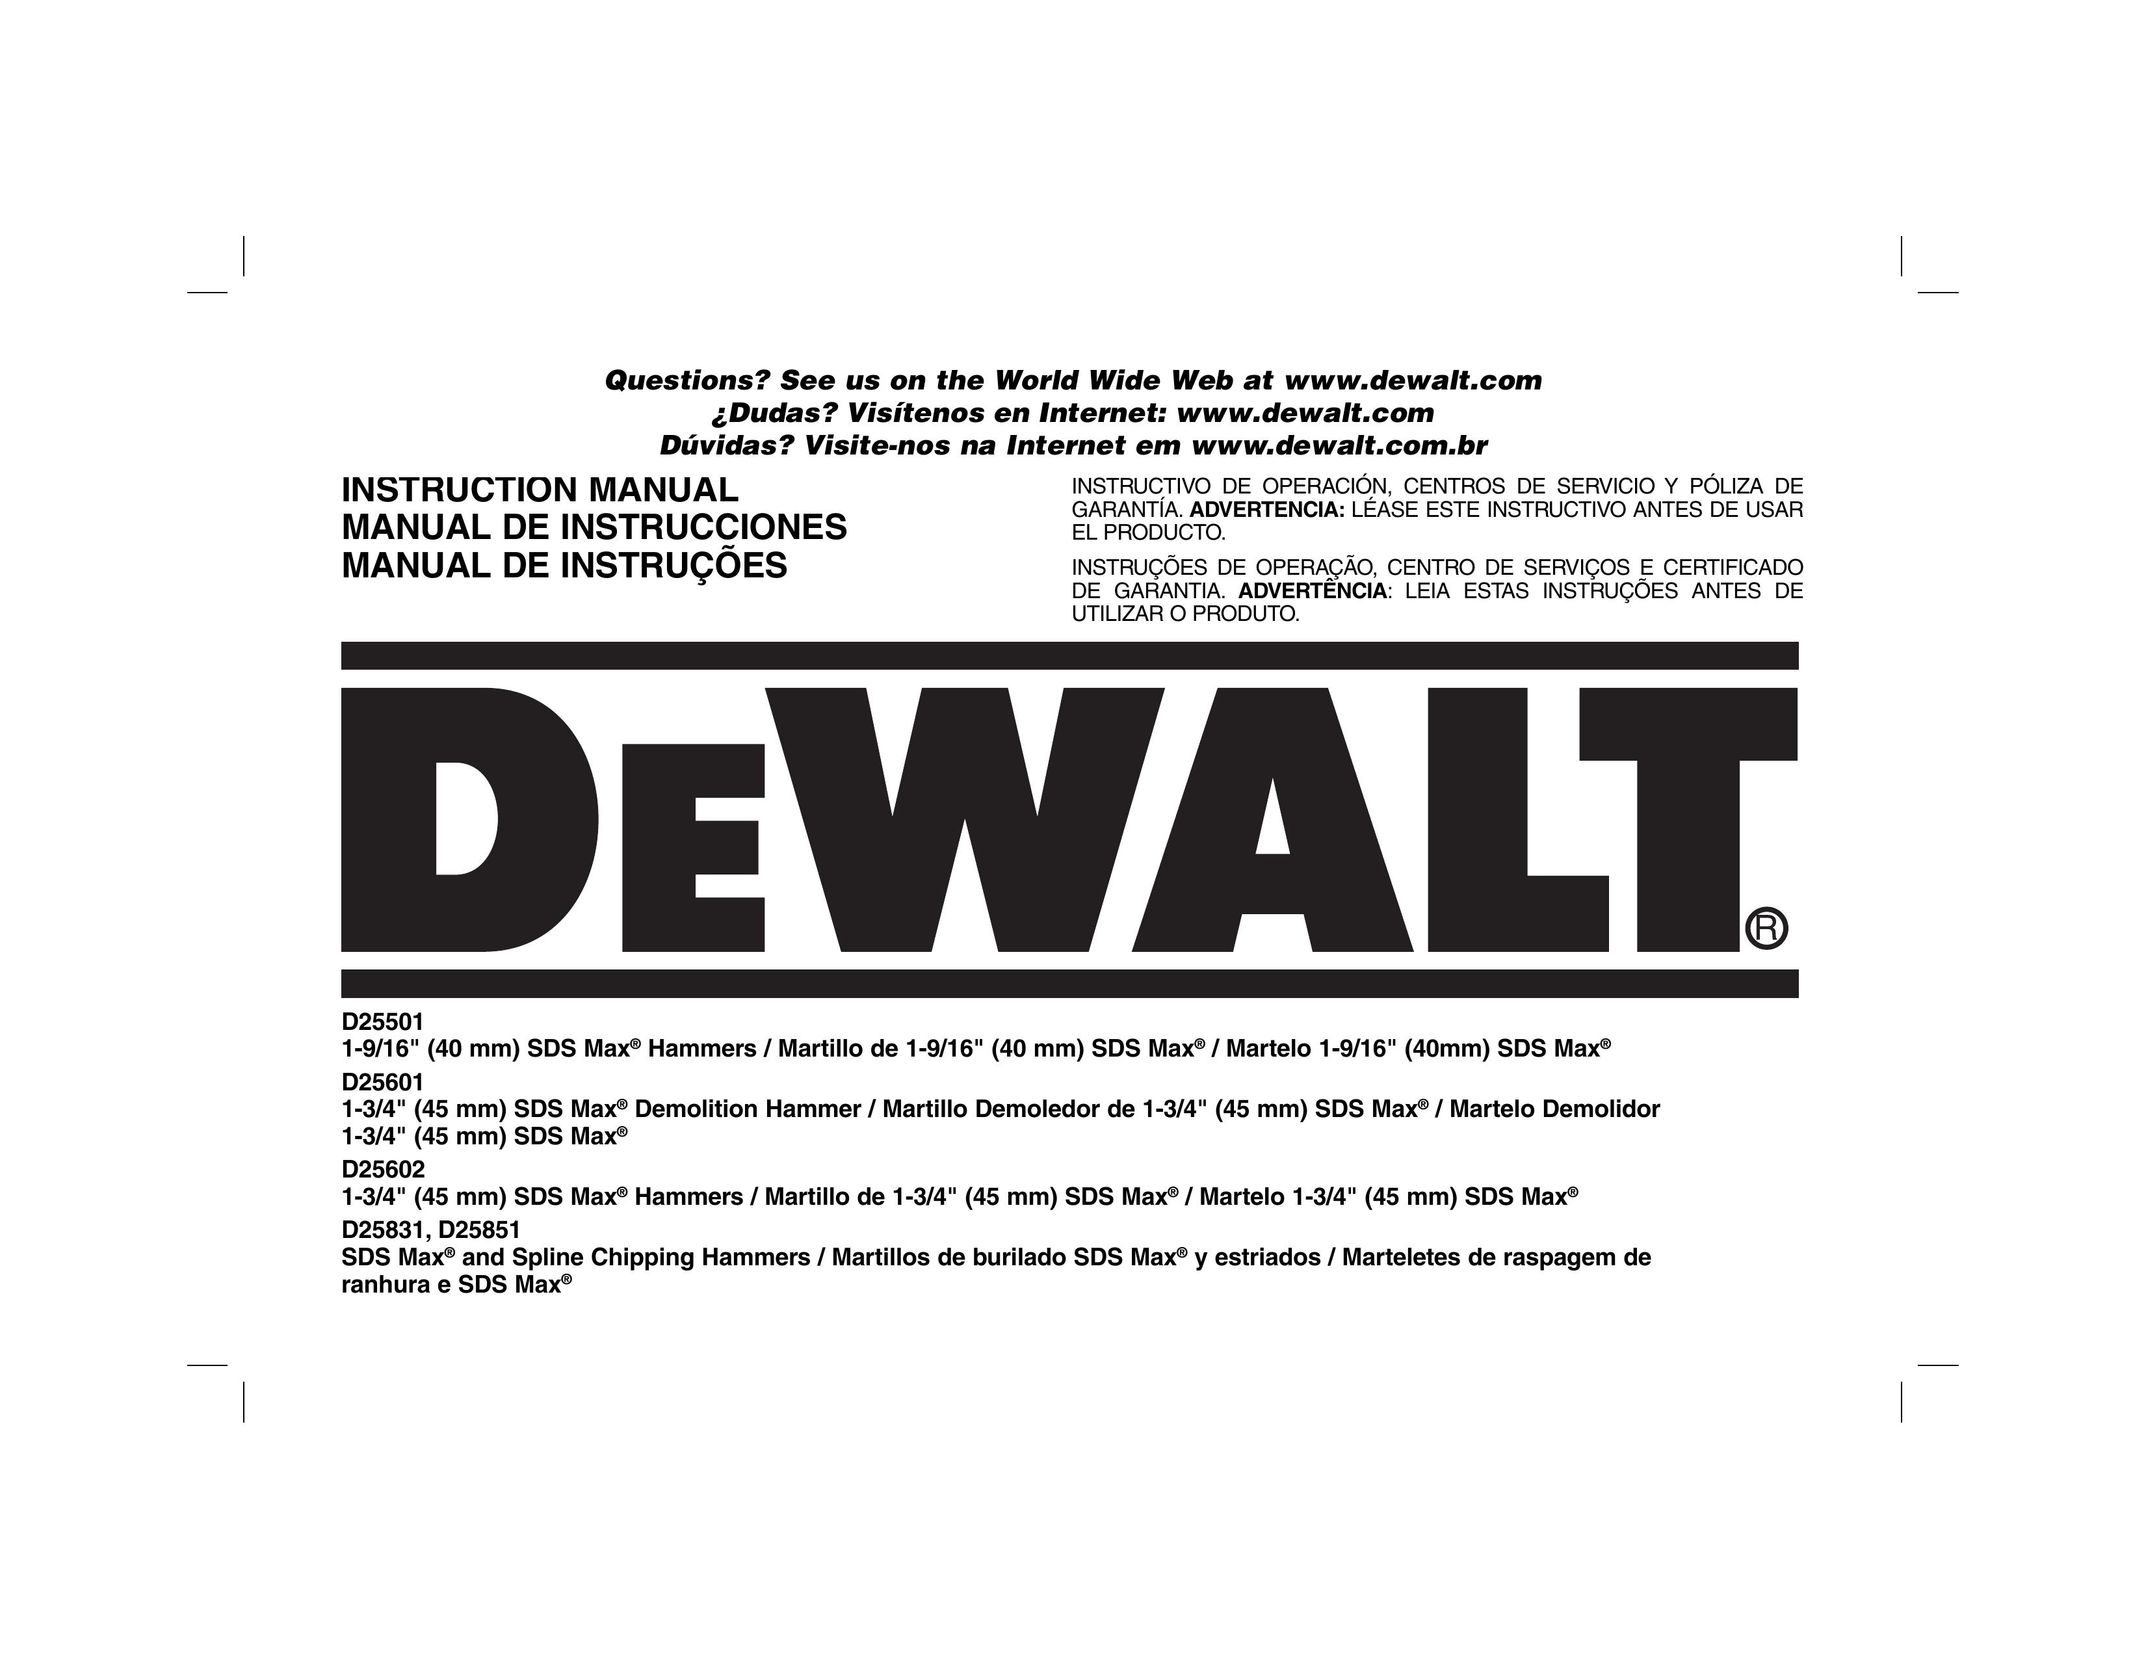 DeWalt D25602 Power Hammer User Manual